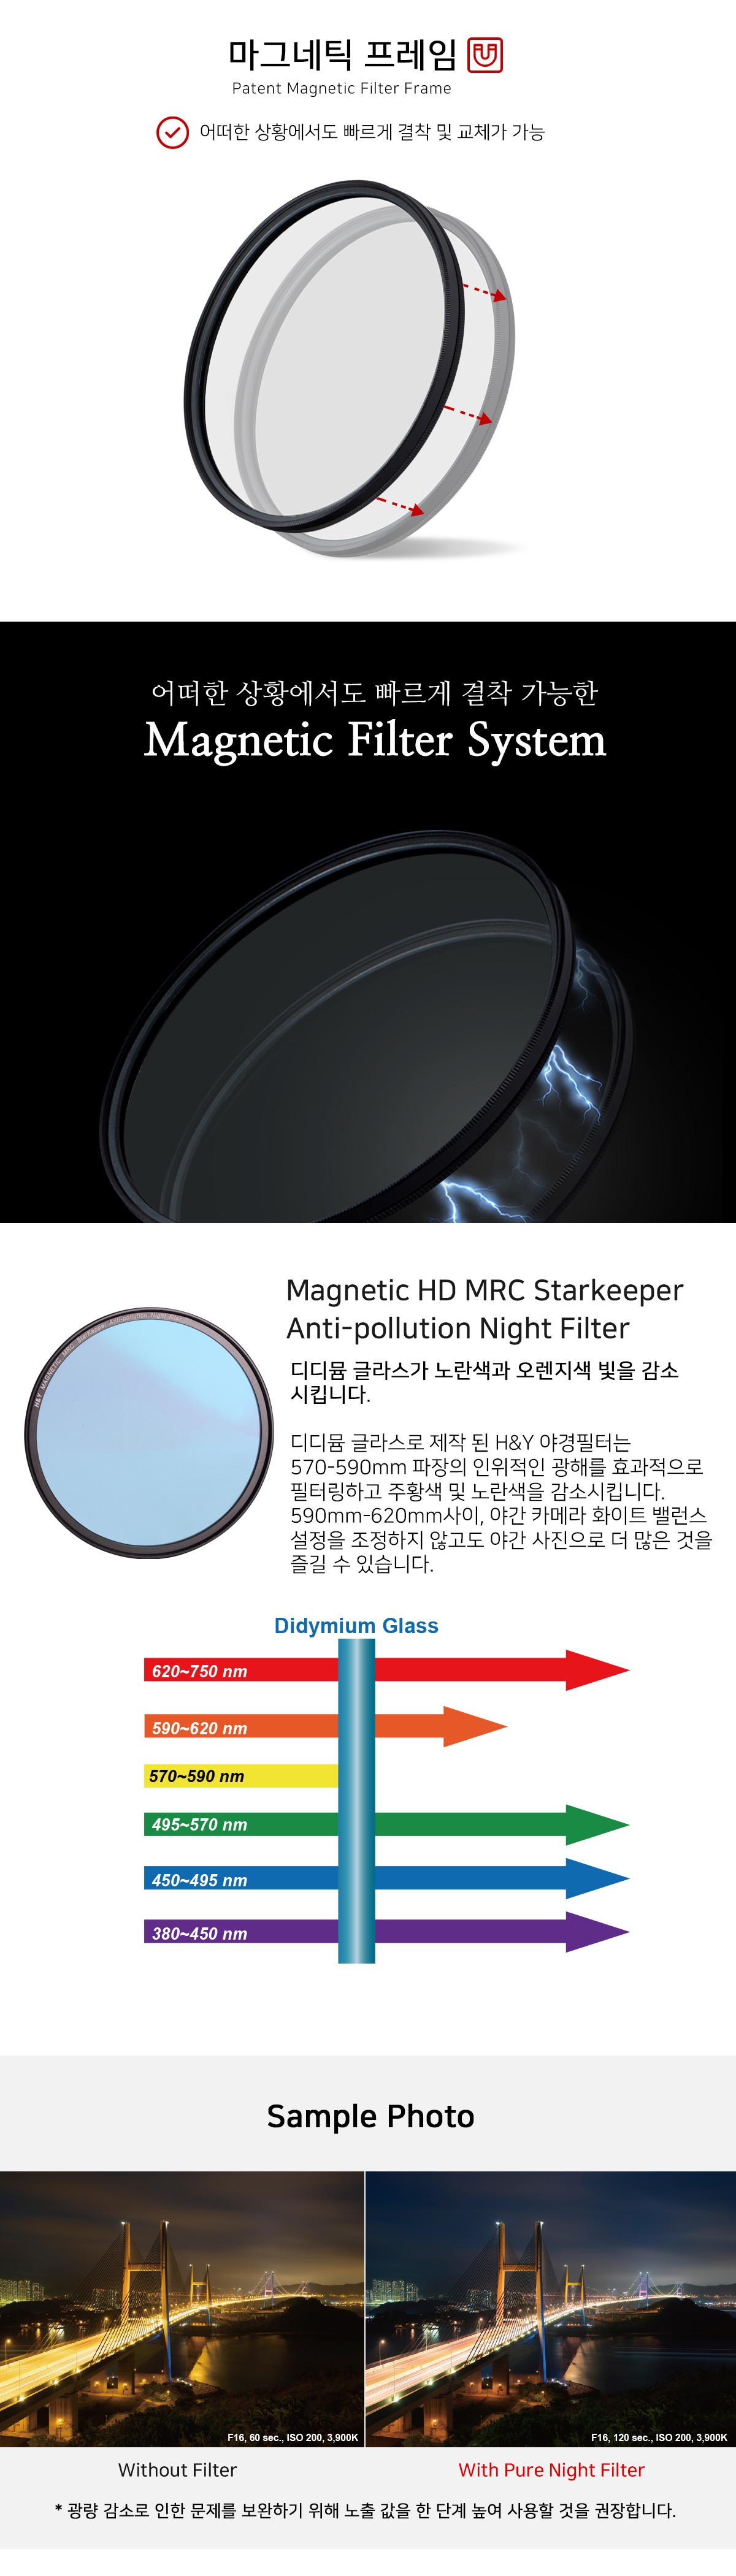 magneticStarkeeper_2.jpg